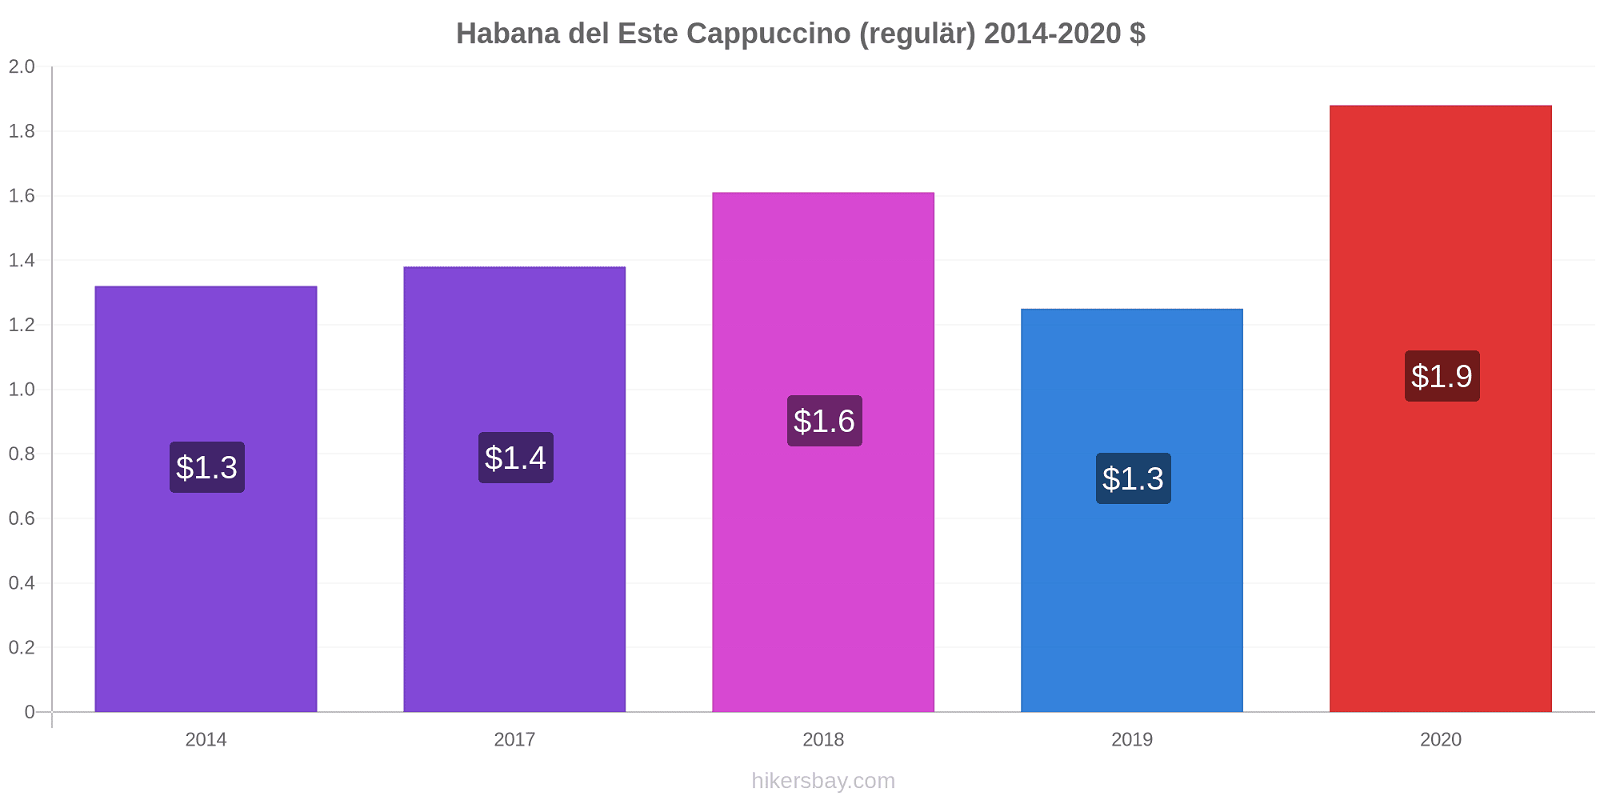 Habana del Este Preisänderungen Cappuccino (regulär) hikersbay.com